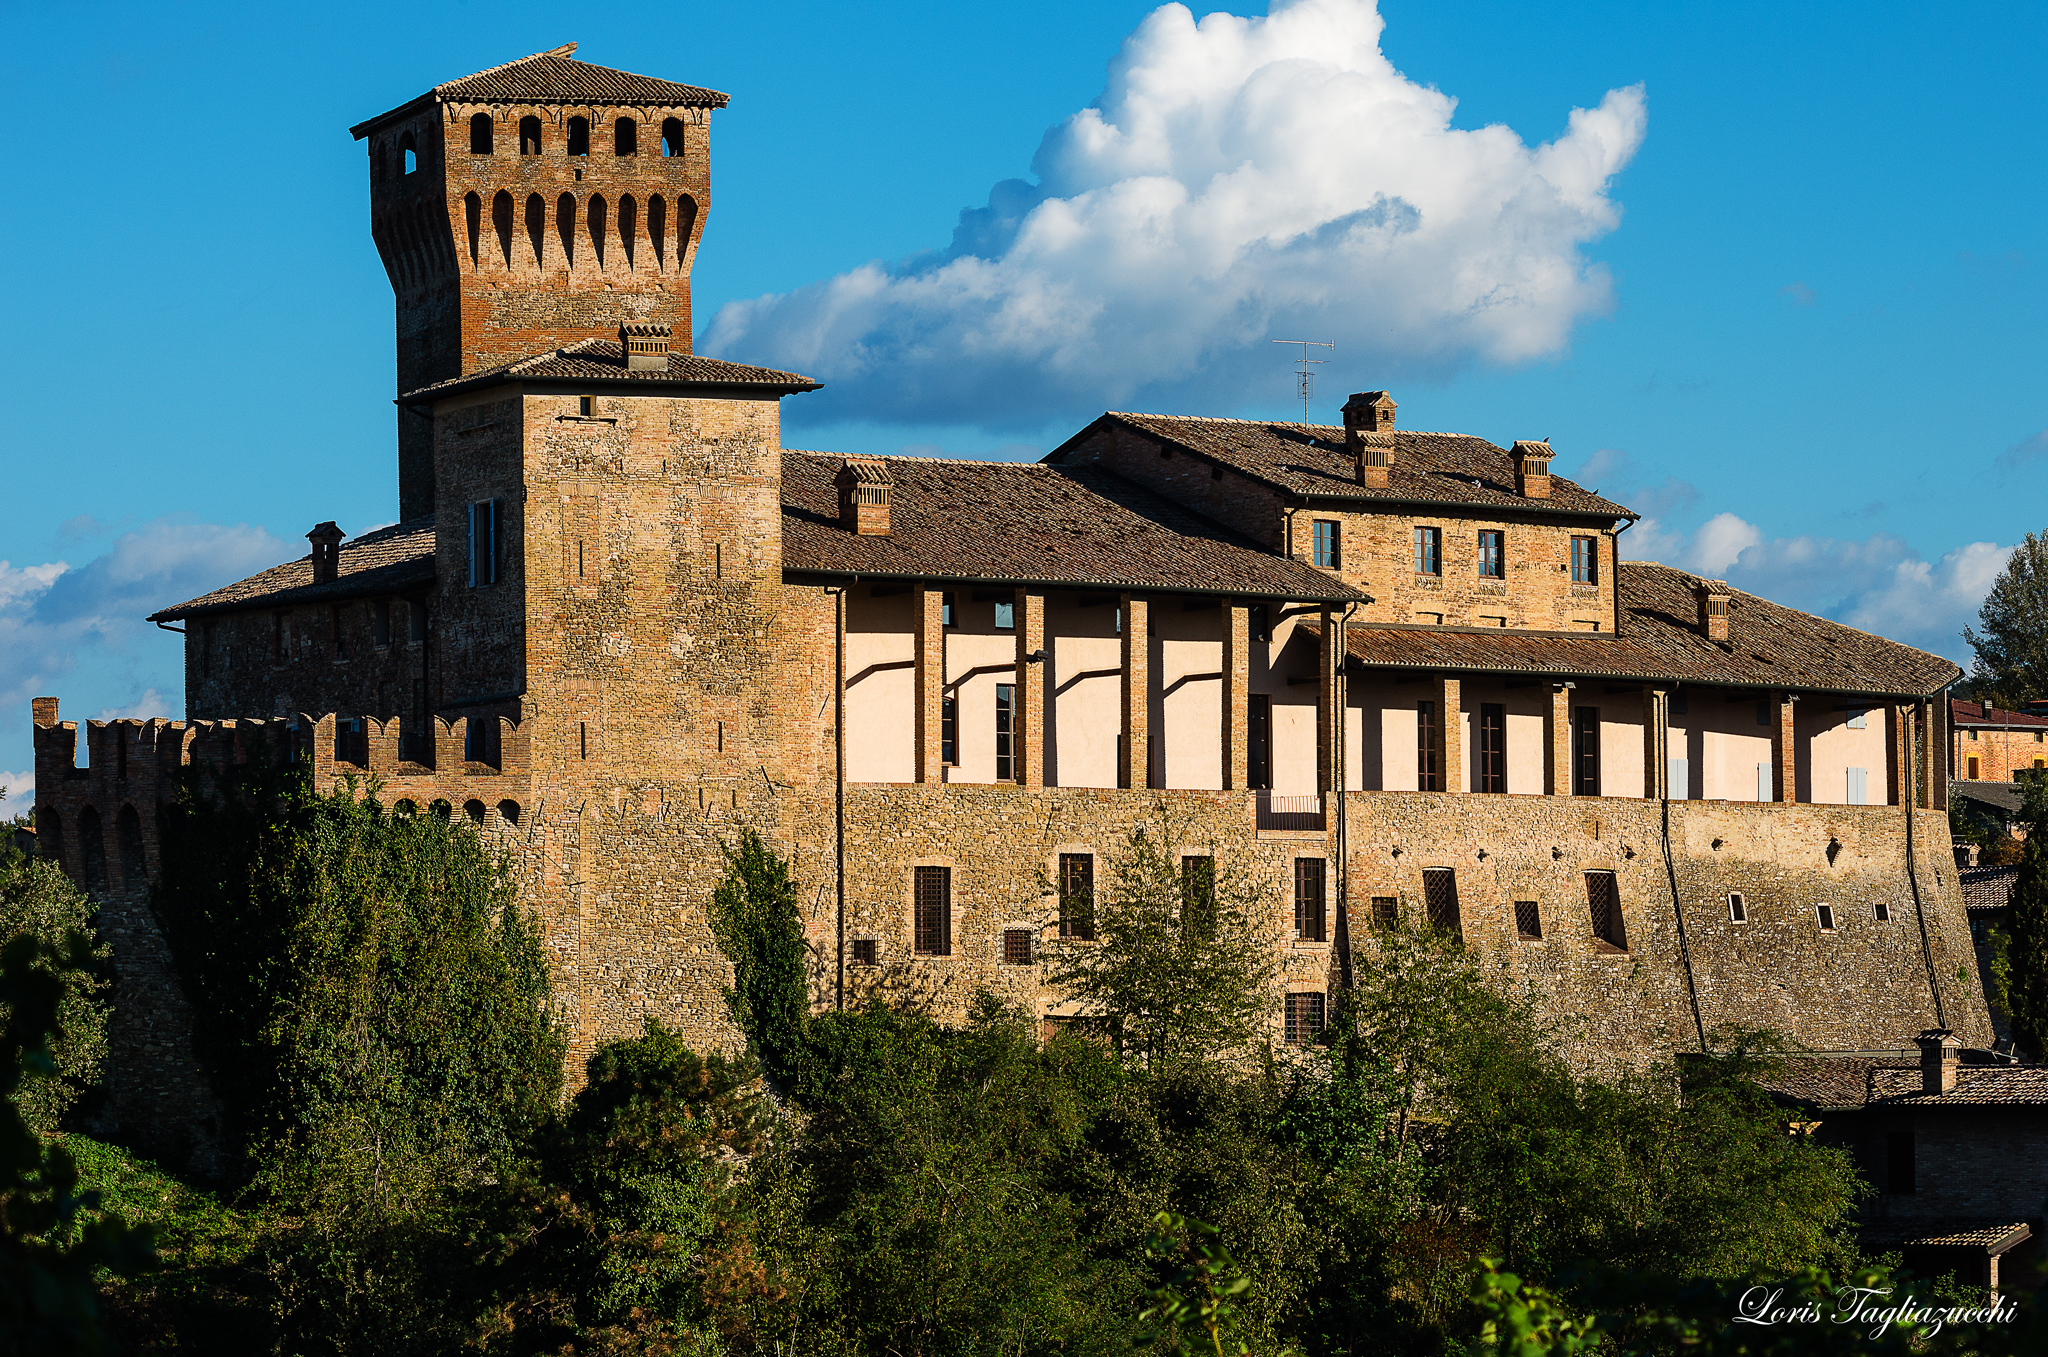 photo: https://upload.wikimedia.org/wikipedia/commons/a/aa/Castello_di_Levizzano_Rangone.JPG